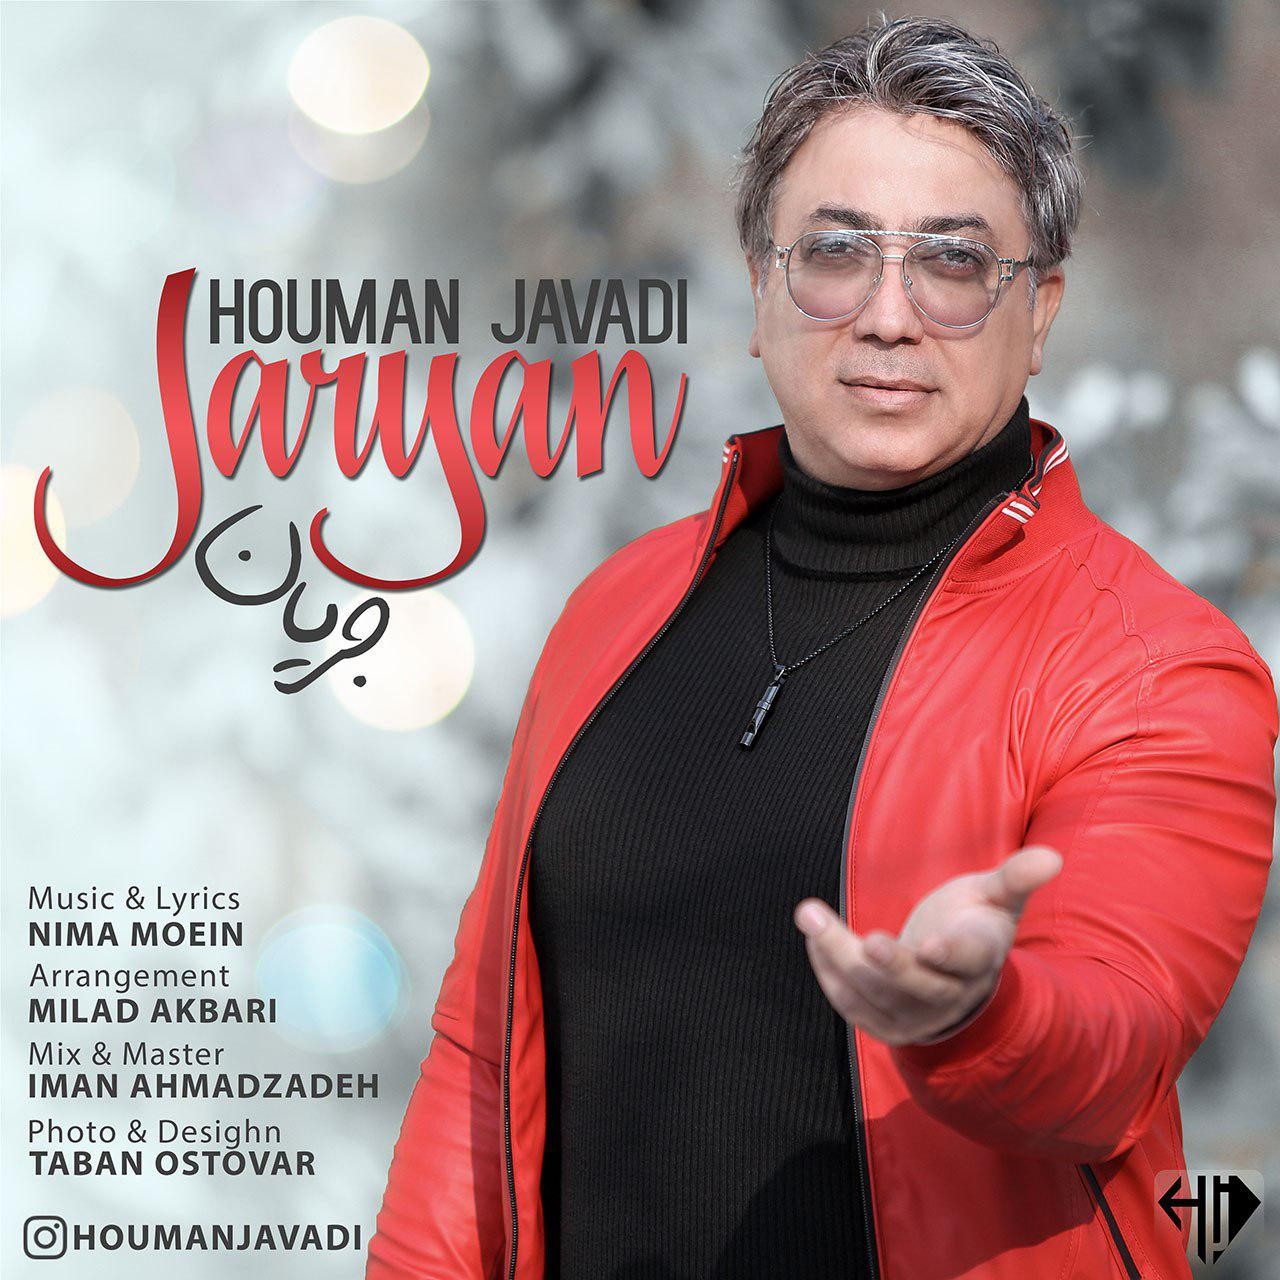  دانلود آهنگ جدید هومن جوادی - جریان | Download New Music By Houman Javadi - Jaryan